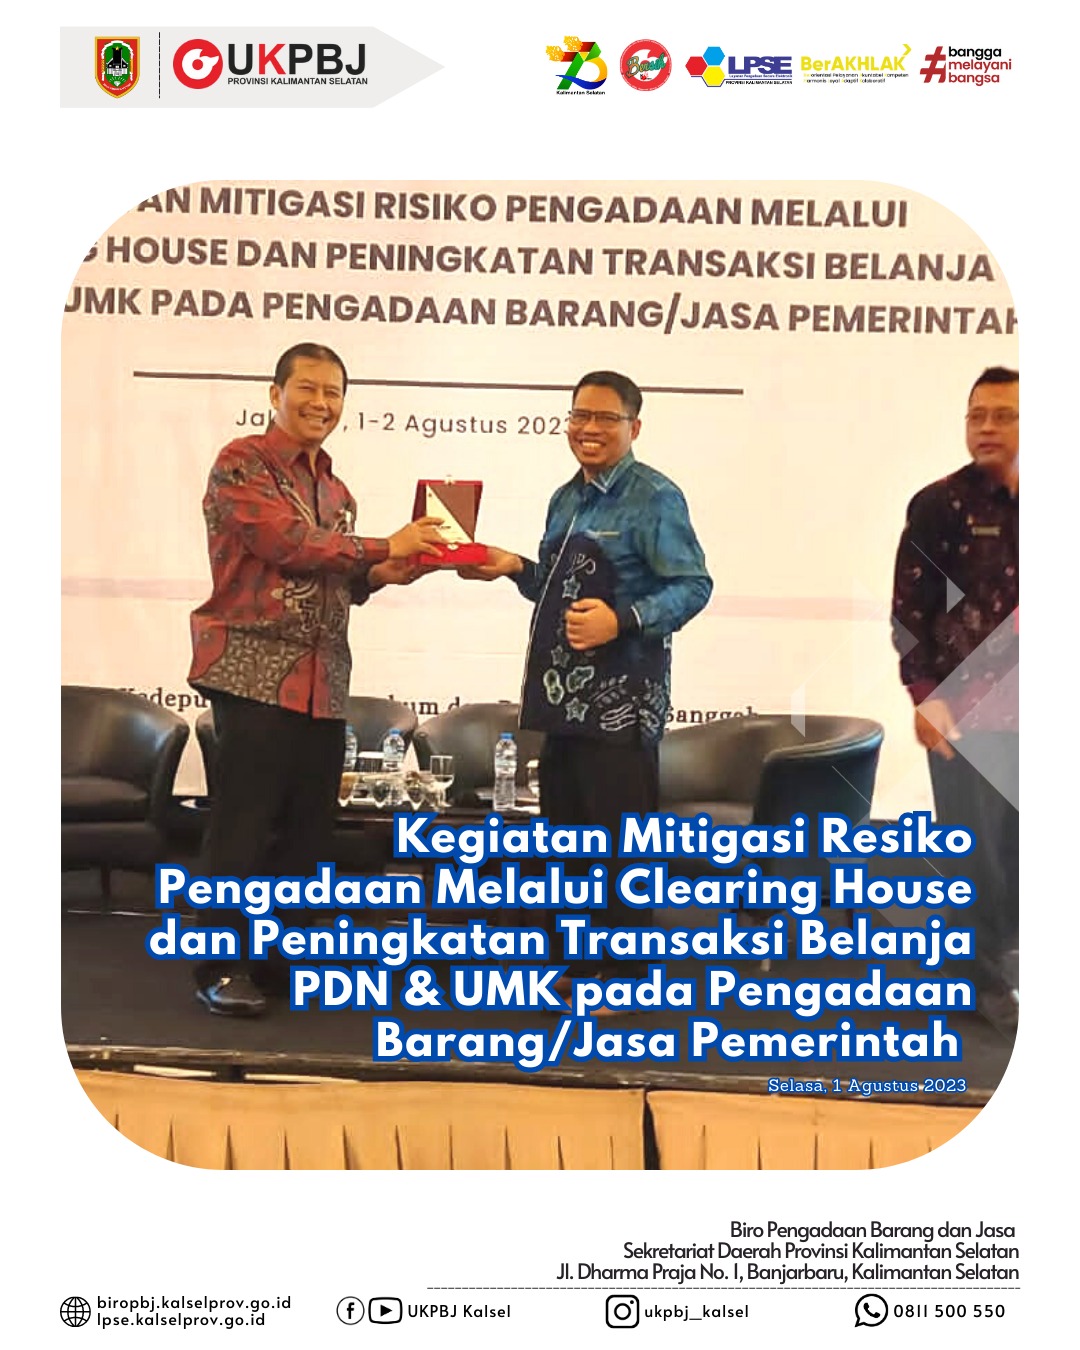 Kegiatan Mitigasi Resiko Pengadaan Melalui Clearing House dan Peningkatan Transaksi Belanja PDN & UMK pada Pengadaan Barang/Jasa Pemerintah, di Hotel JS Luwansa Jakarta.